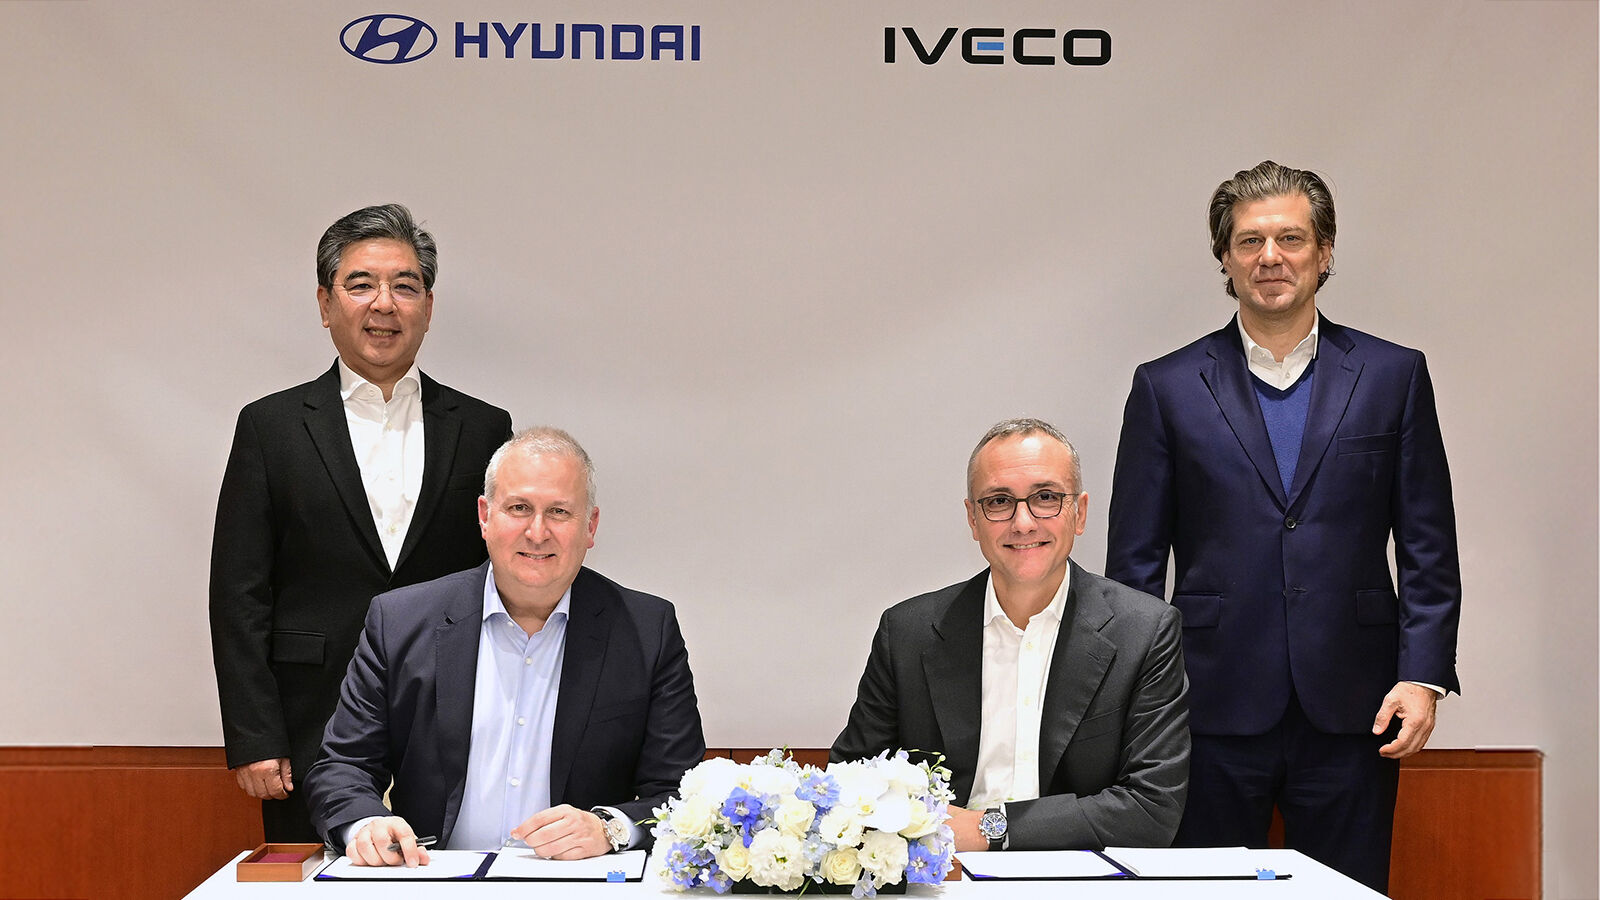 [MK01] (Image) Hyundai Motor to supply eLCV to Ivecro Group in Europe